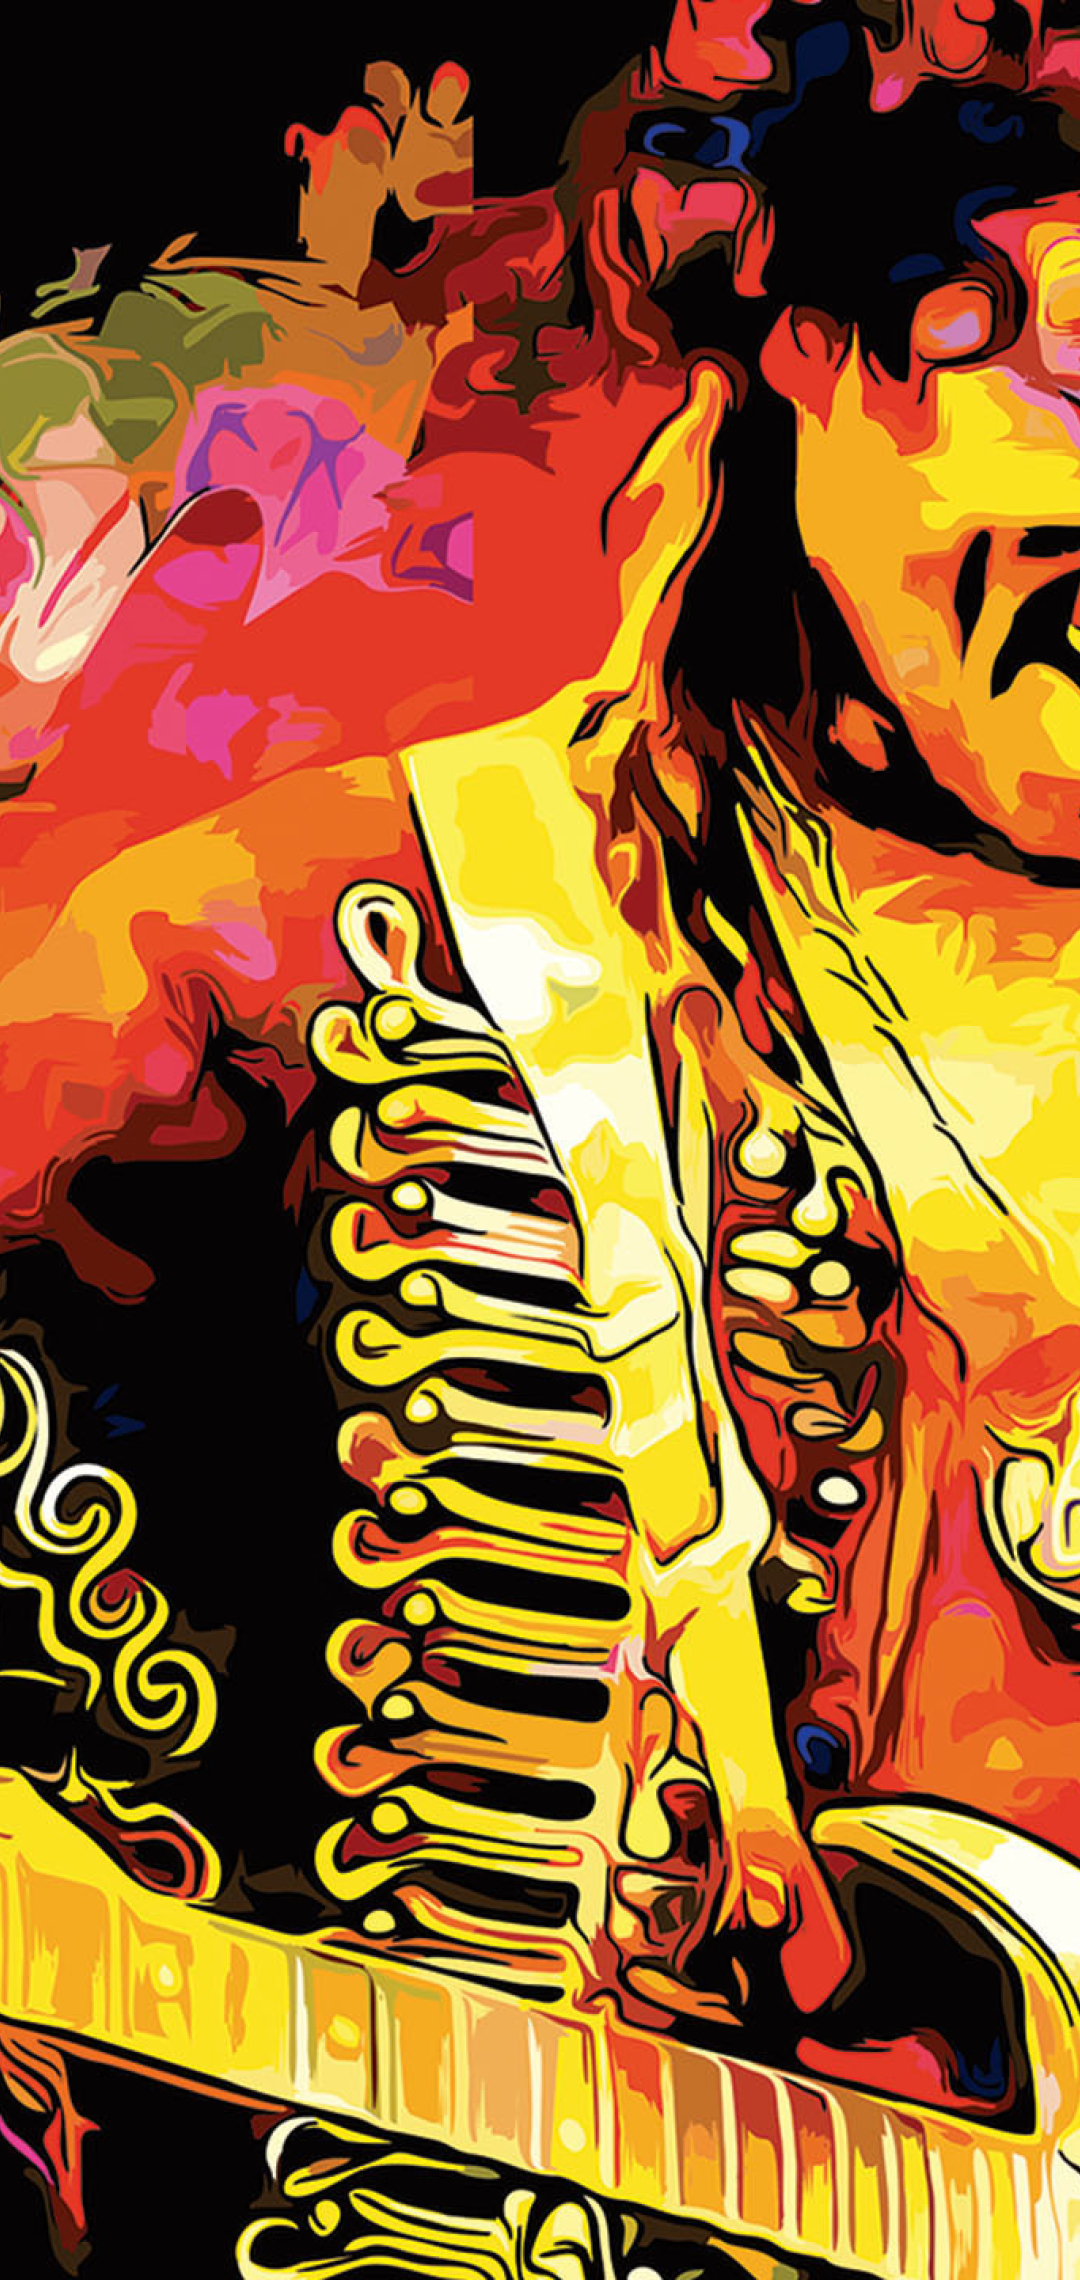 Jimi Hendrix phone wallpaper» 1080P, 2k, 4k Full HD Wallpapers, Backgrounds  Free Download | Wallpaper Crafter